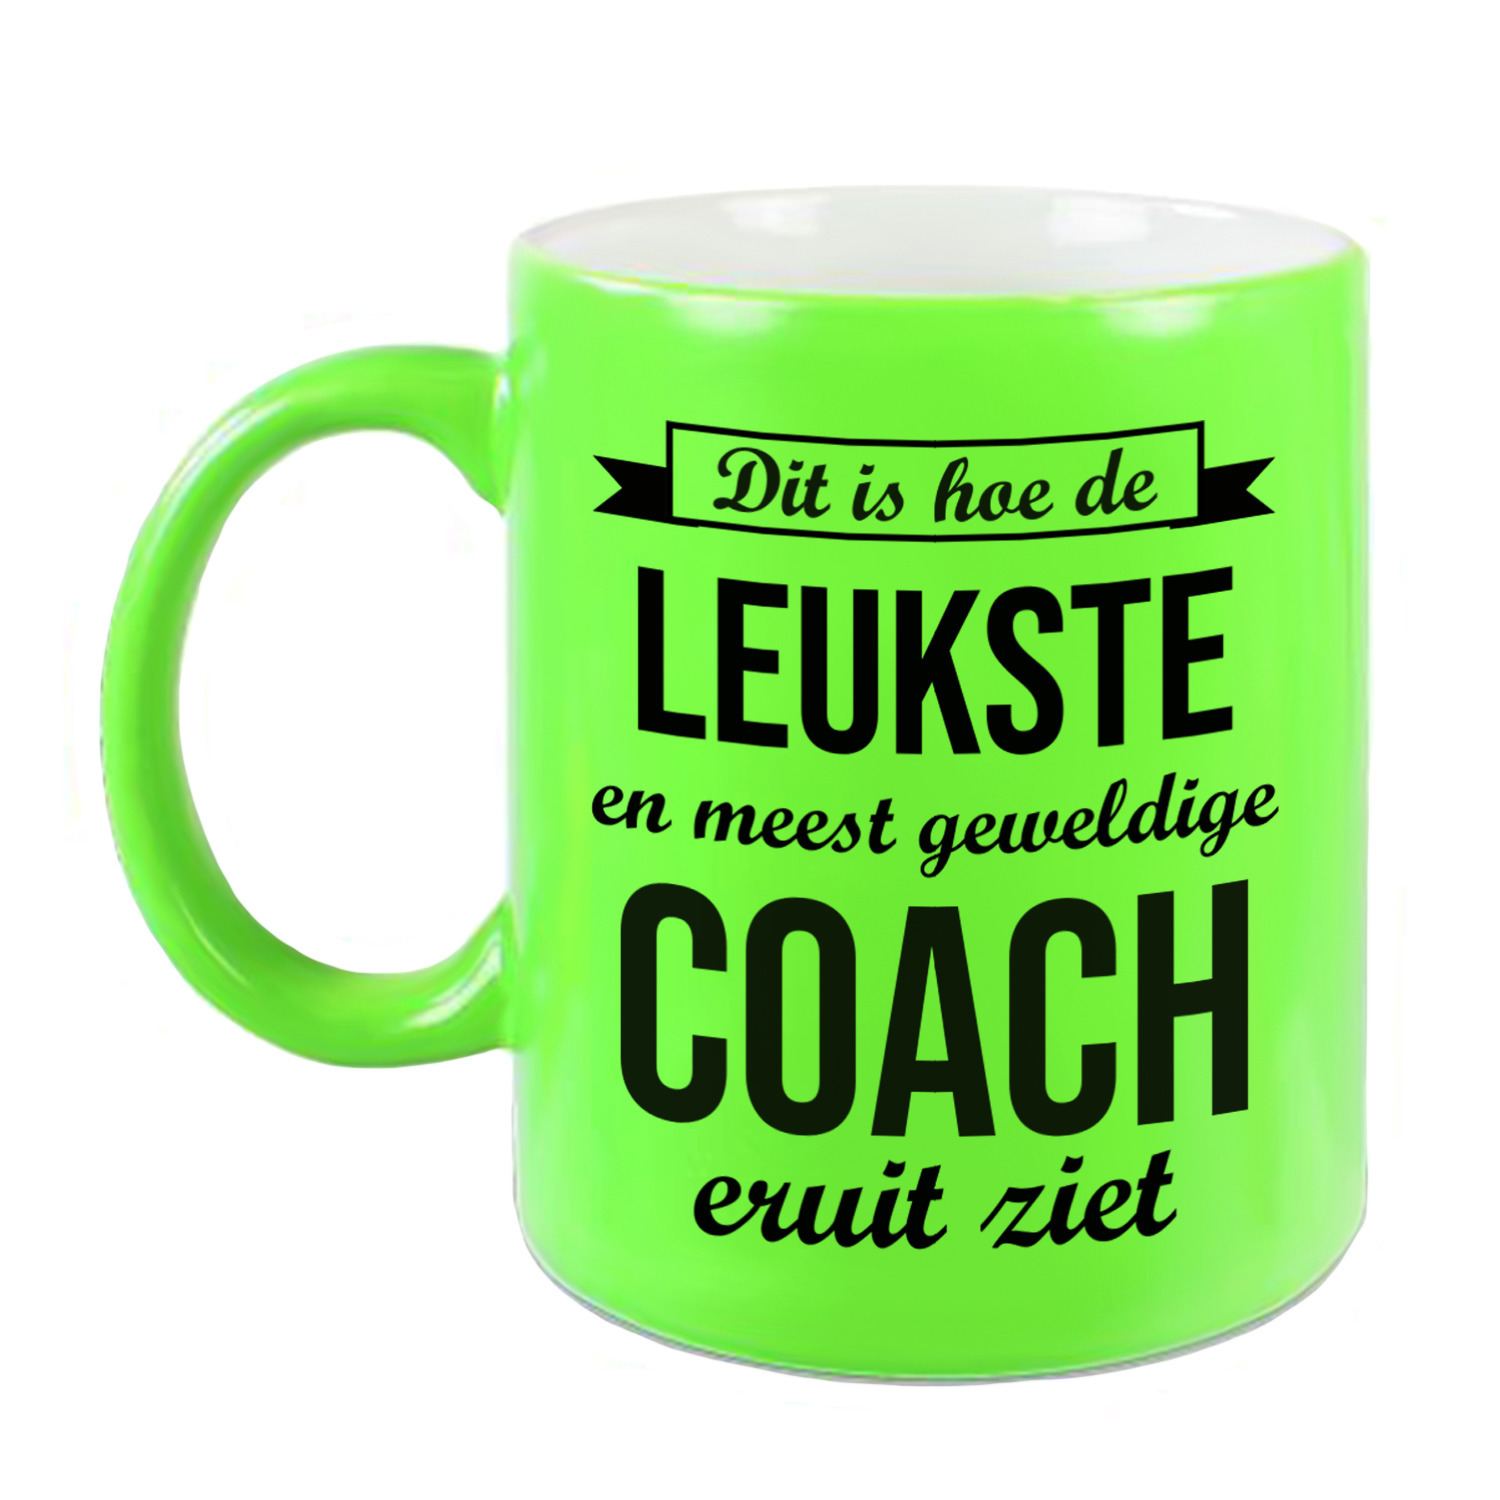 Leukste en meest geweldige coach cadeau koffiemok / theebeker neon groen 330 ml